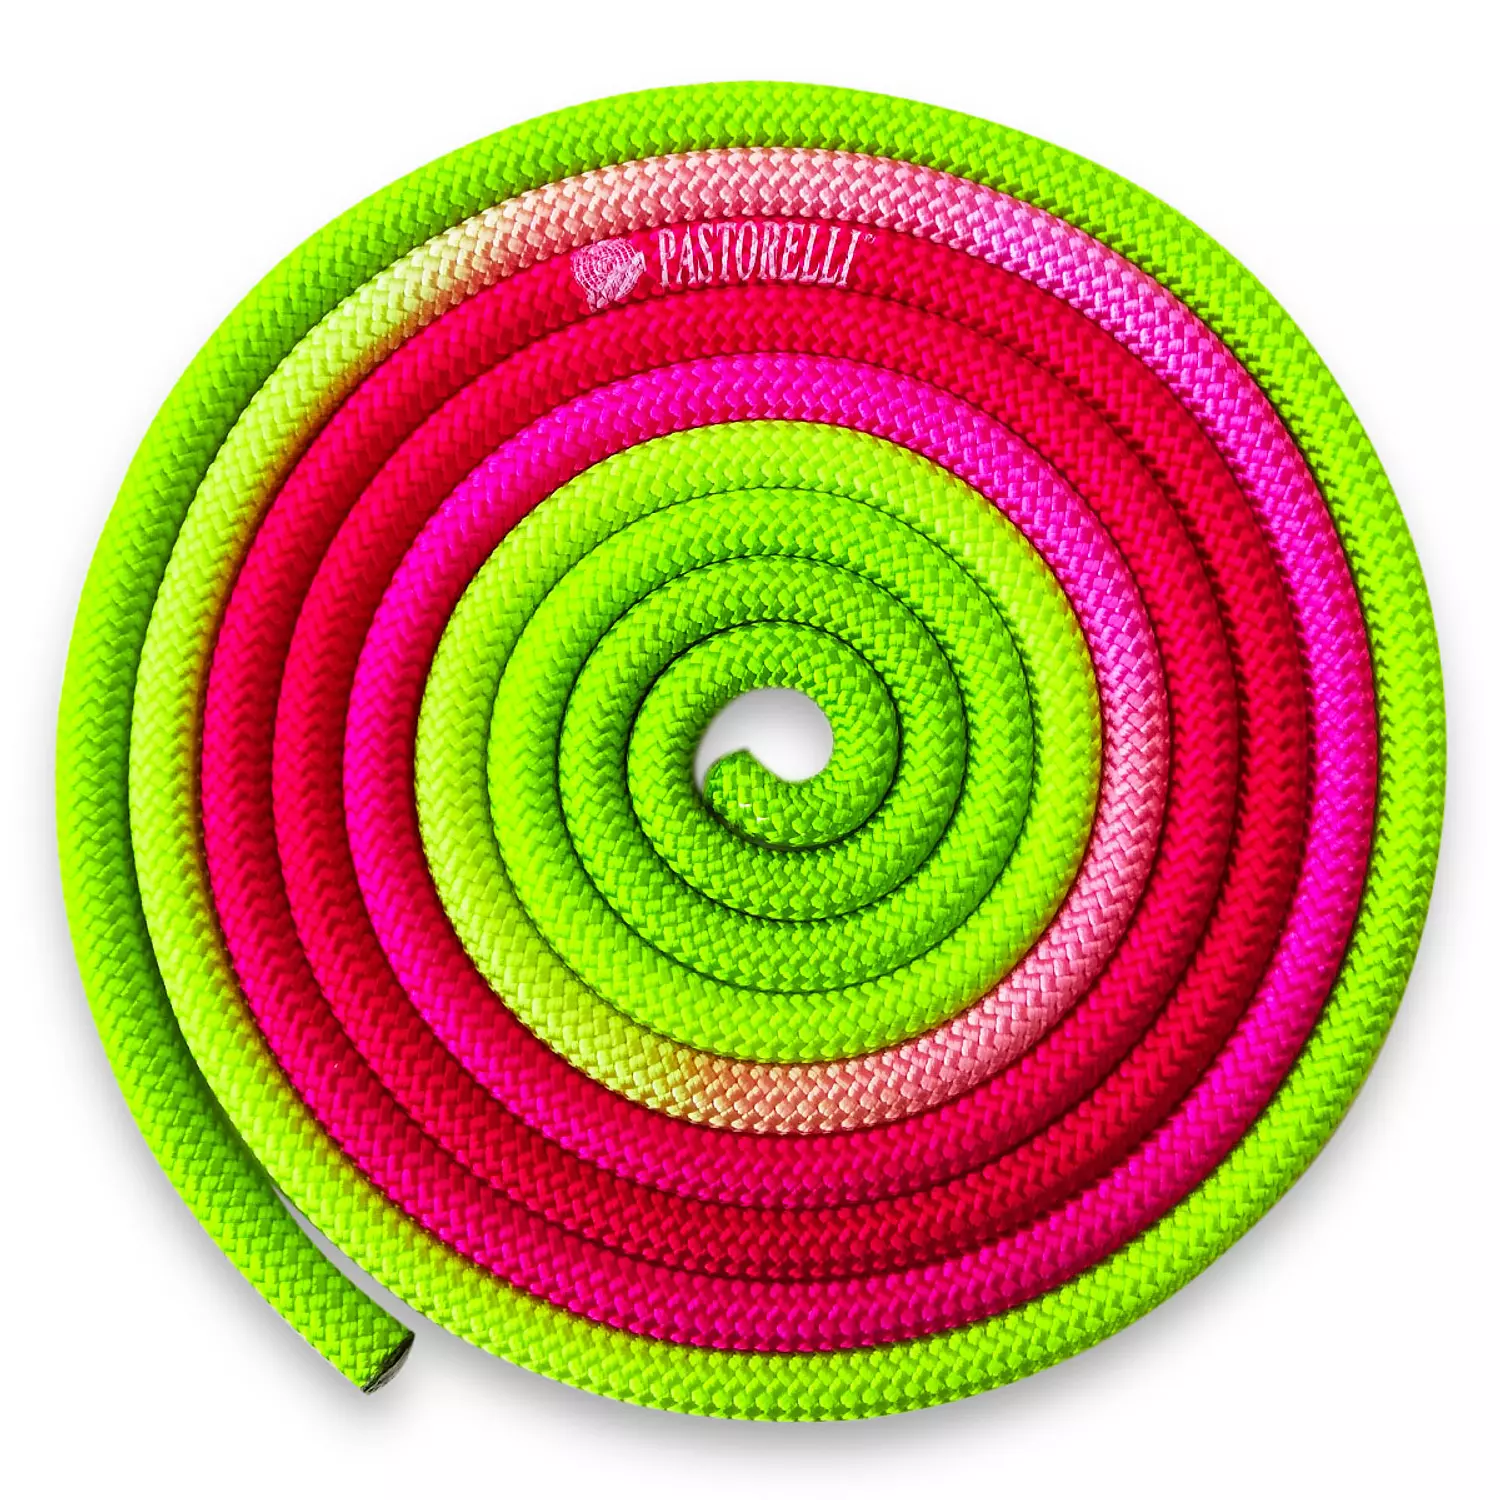 Pastorelli-New Orleans multicolor rope FIG 3m 4